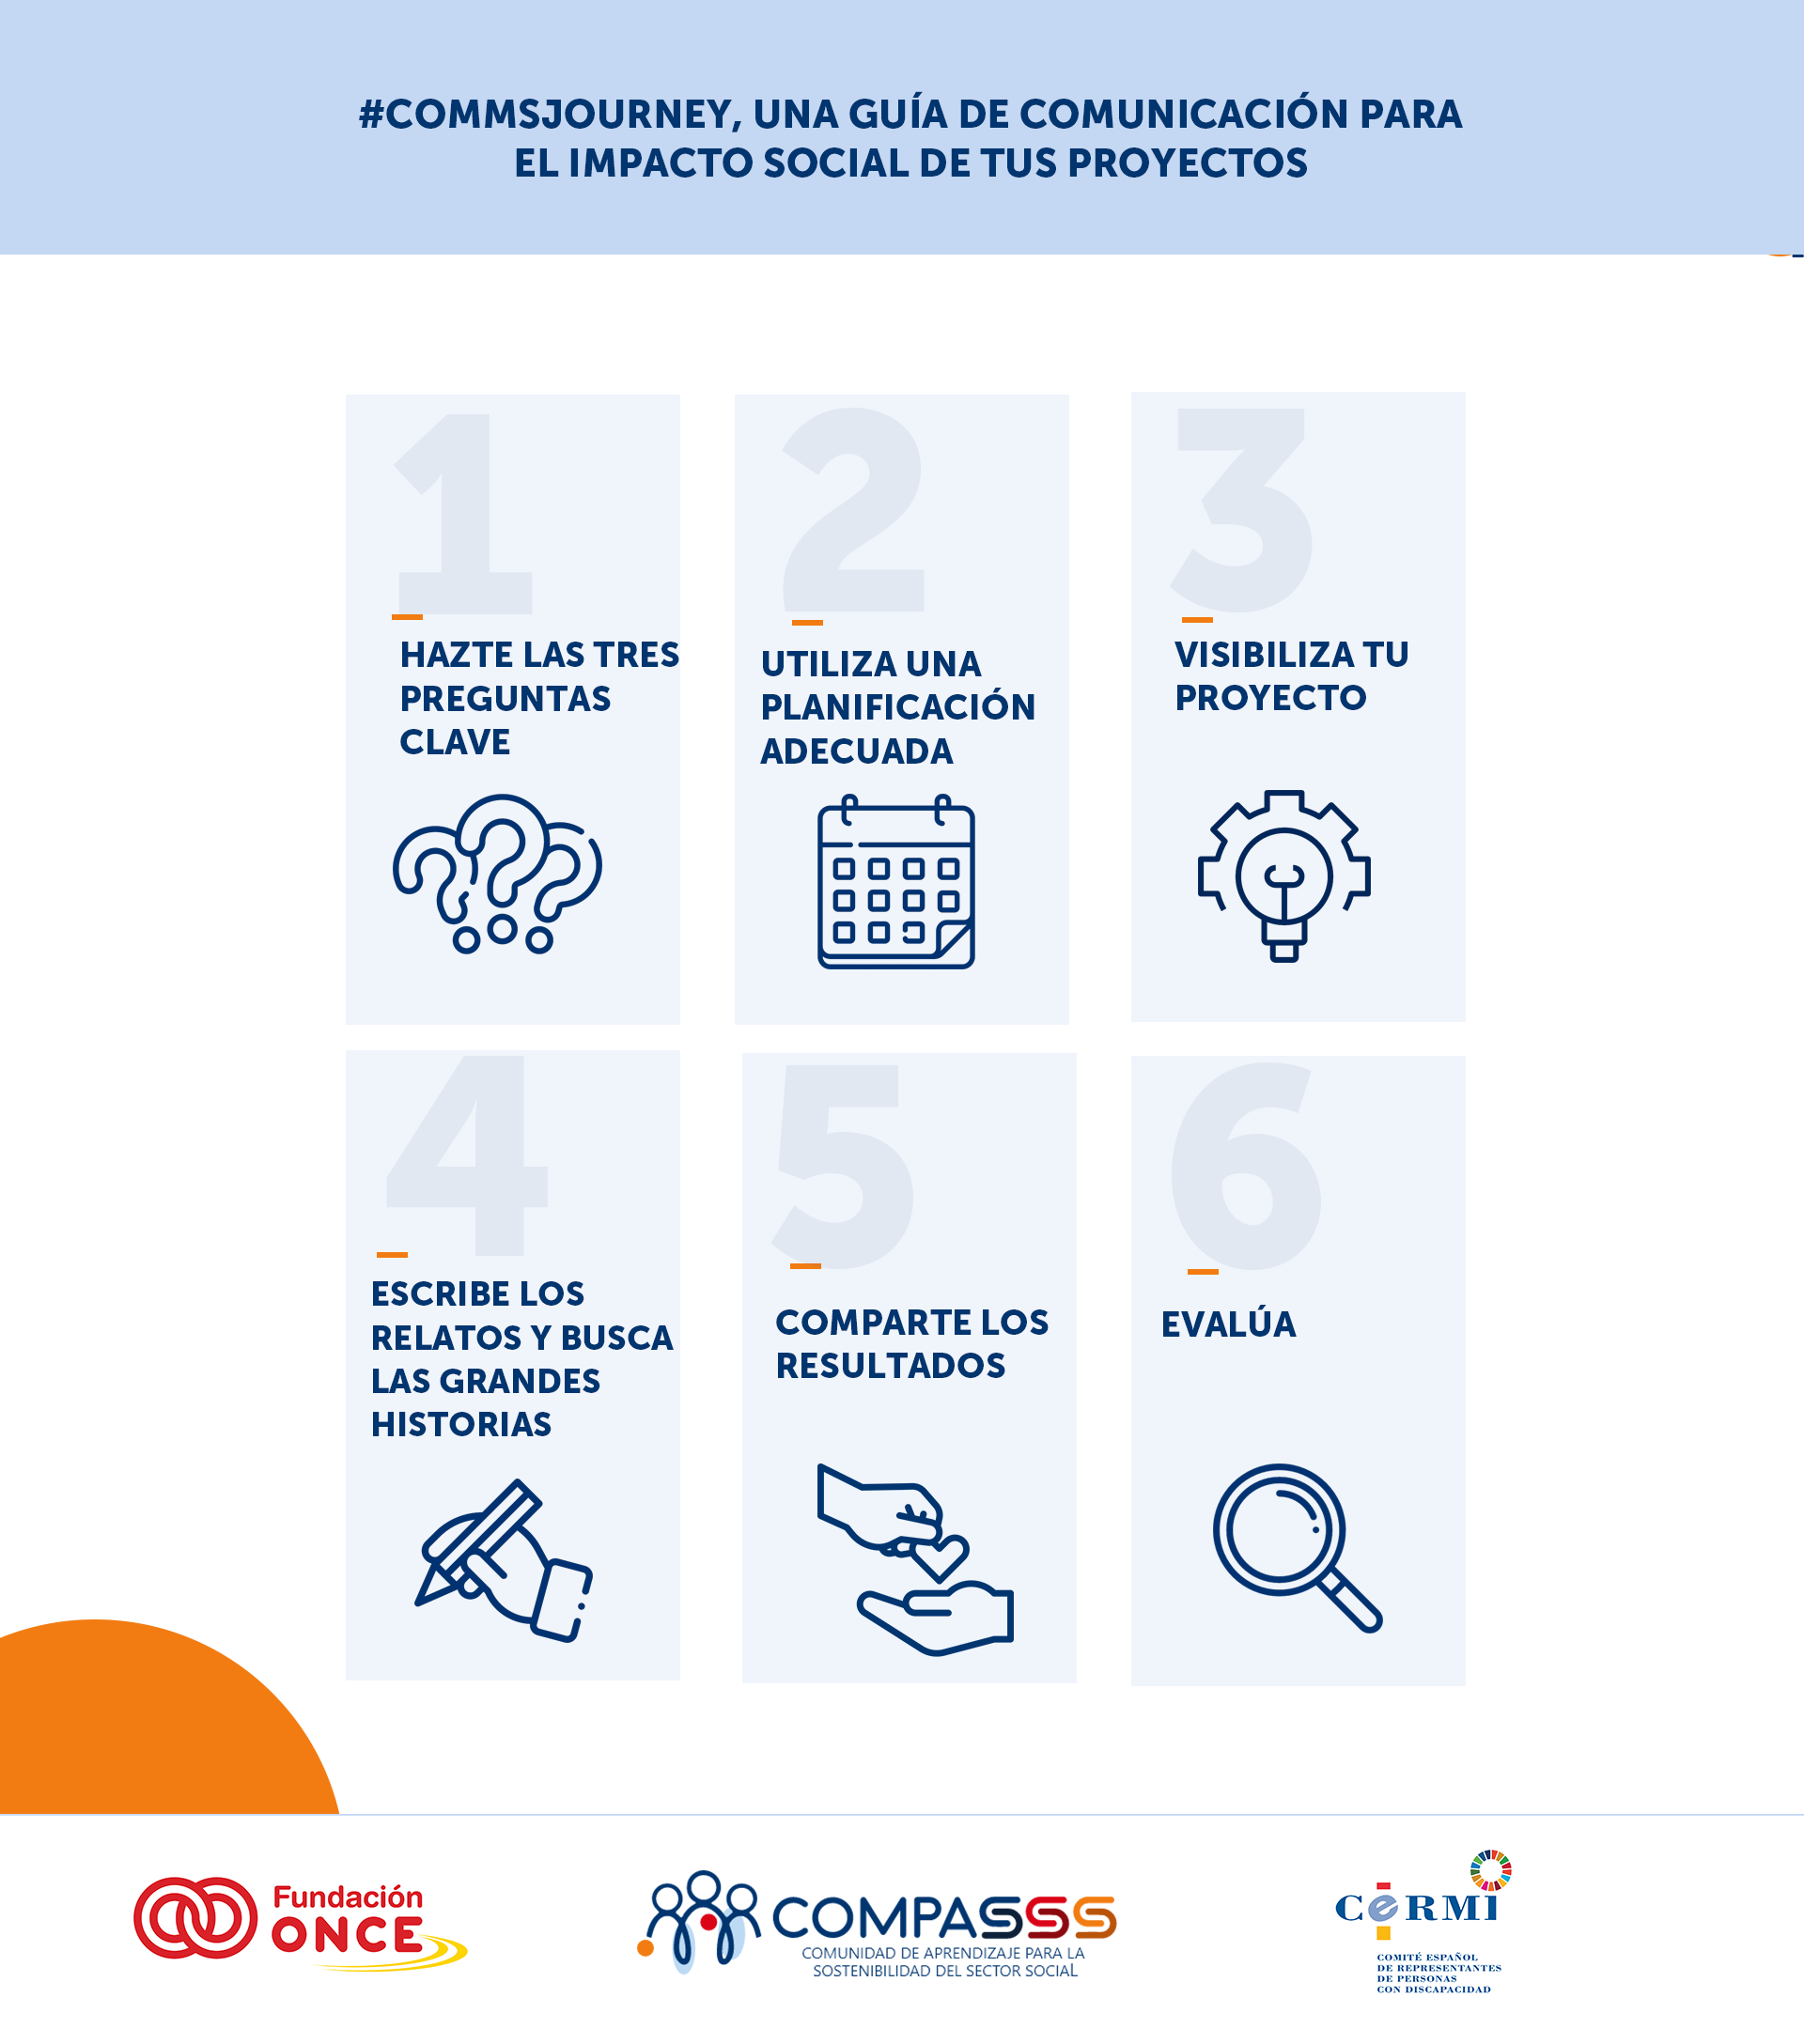 Guía de comunicación 'CommsJourney' con 6 pasos para crear impacto social en los proyectos